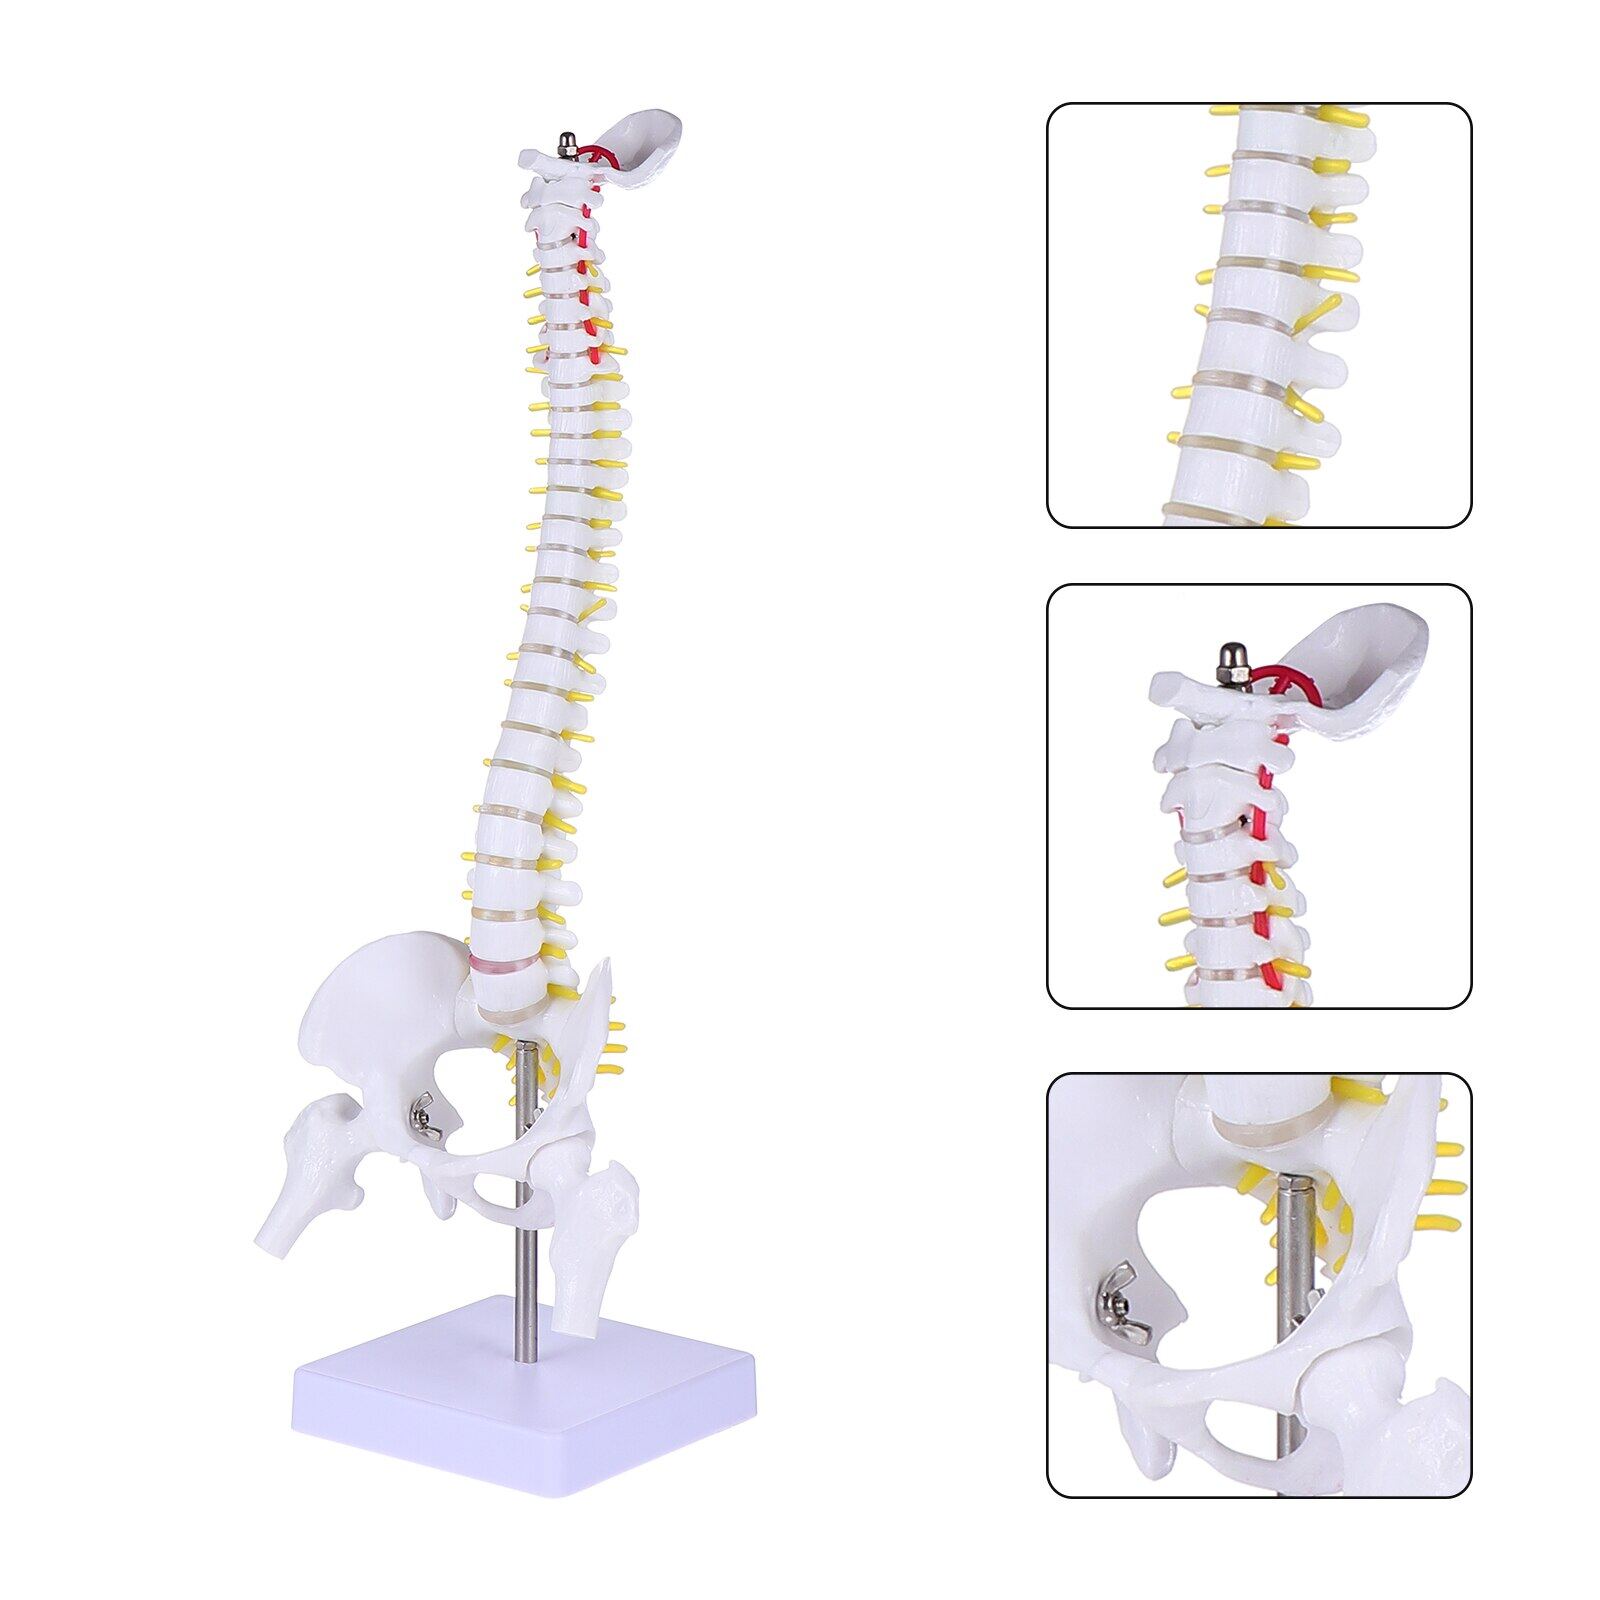 Model Spine Anatomy Human Anatomical Spinal Nerves Training Models